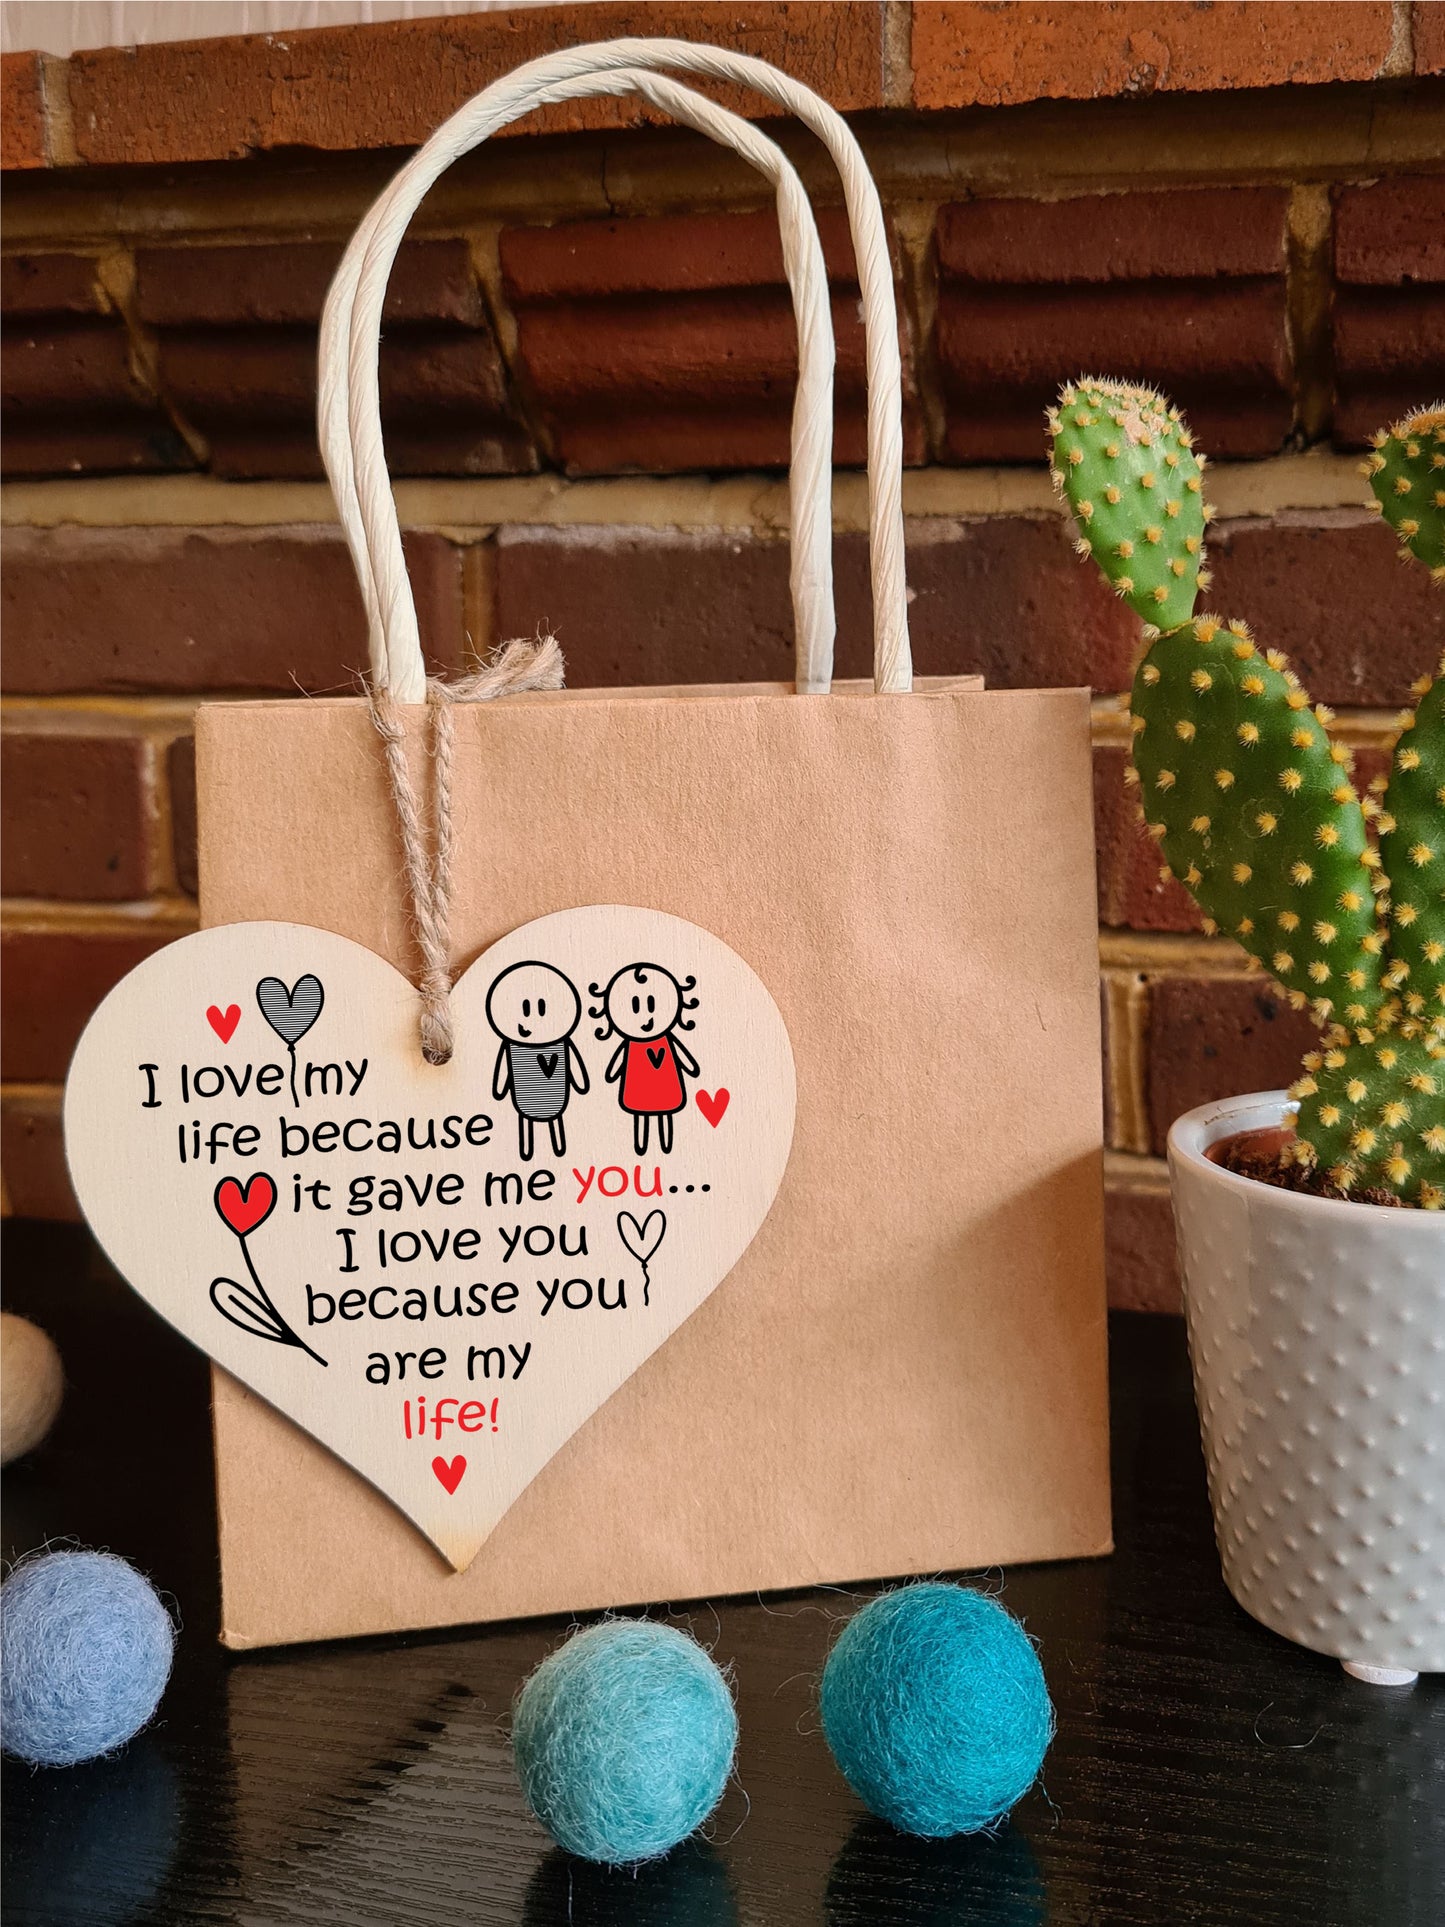 Handmade Wooden Hanging Heart Plaque Gift perfect for your Boyfriend or Girlfriend Romantic Keepsake